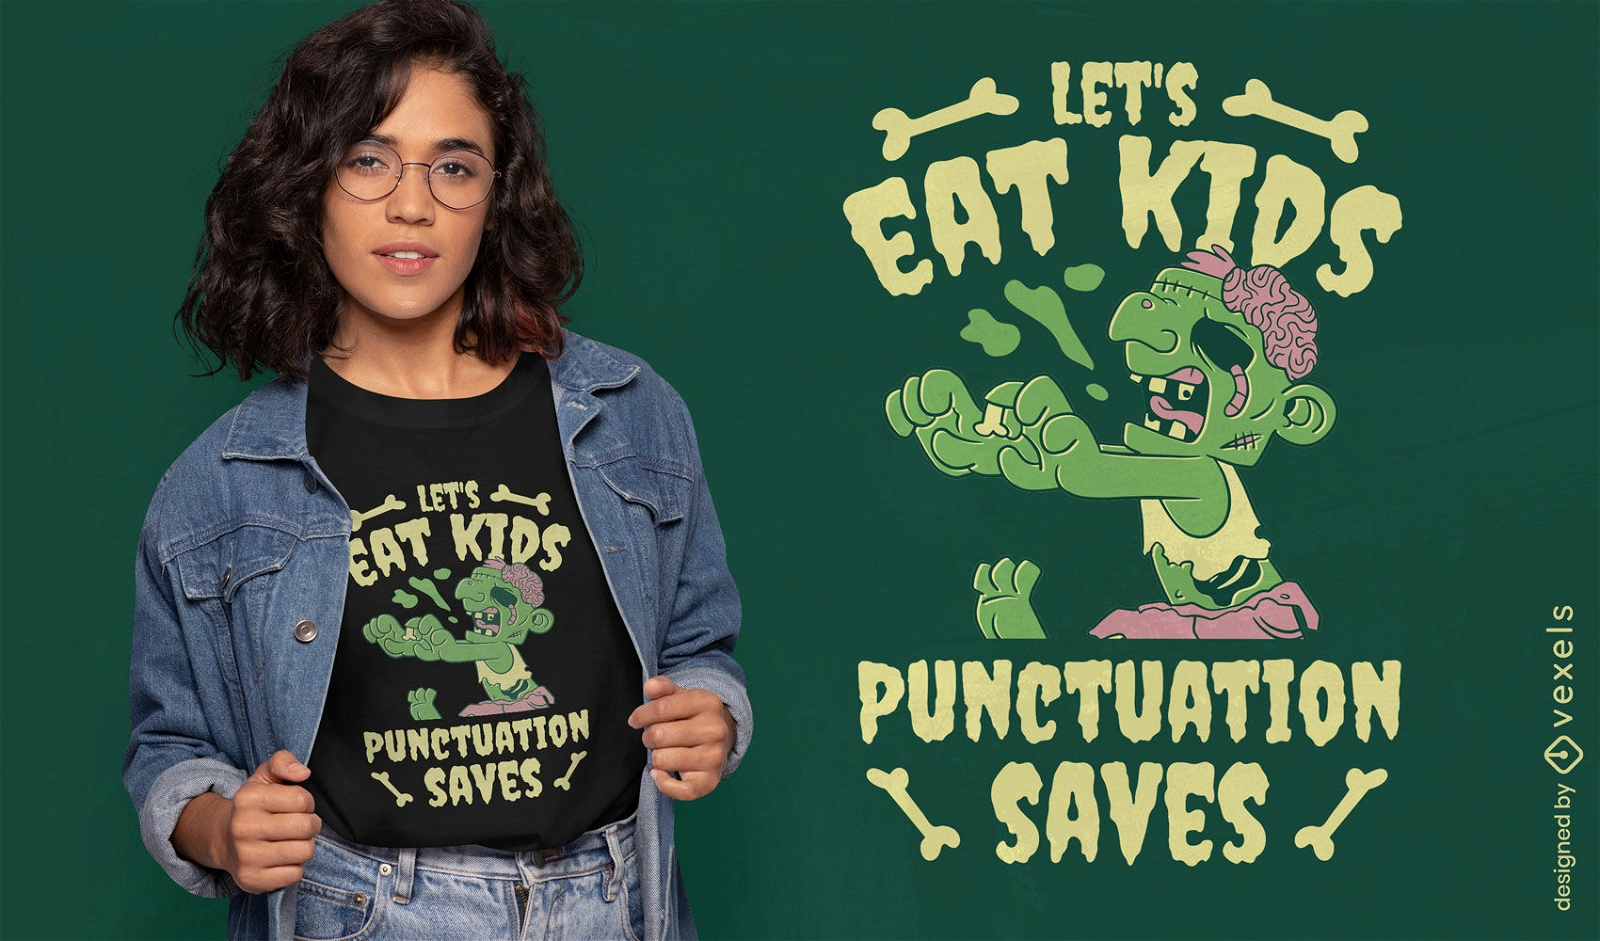 Let's eat kids funny Halloween t-shirt design